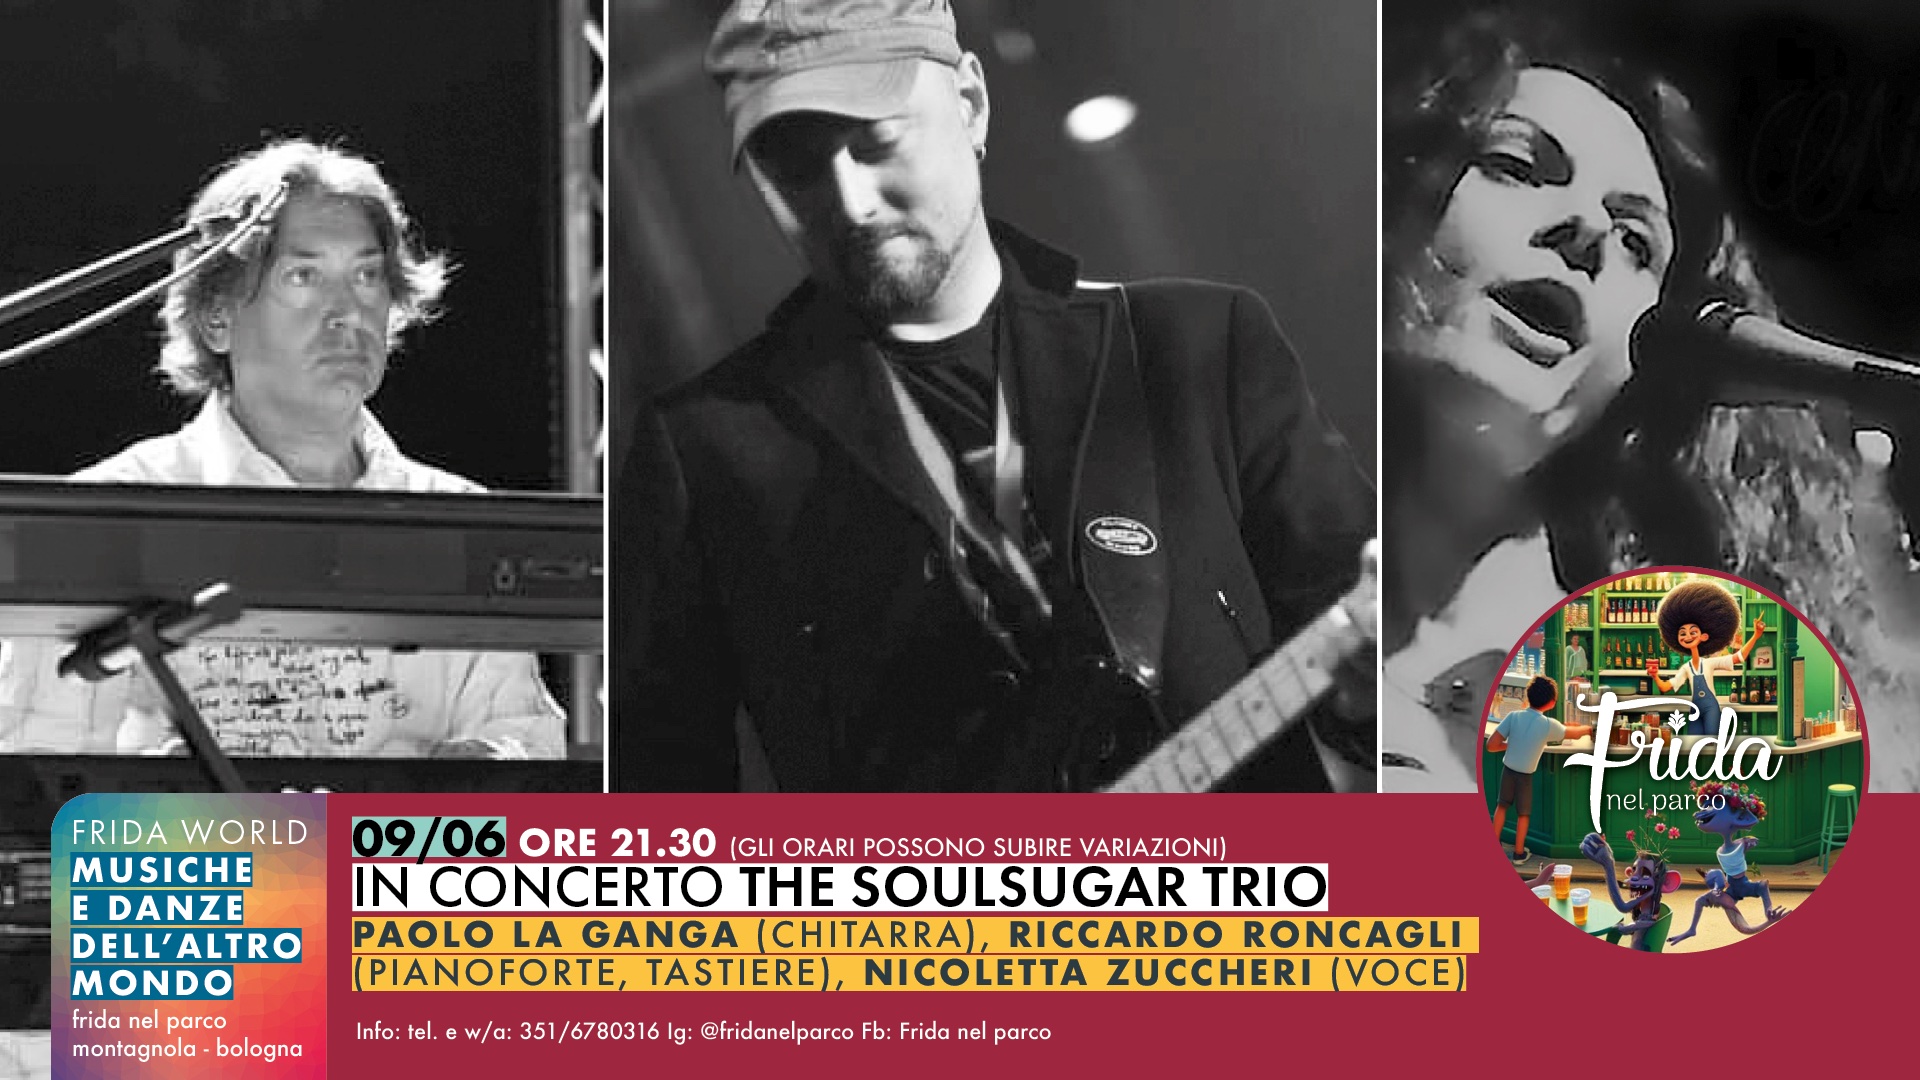 The Soulsugar Trio